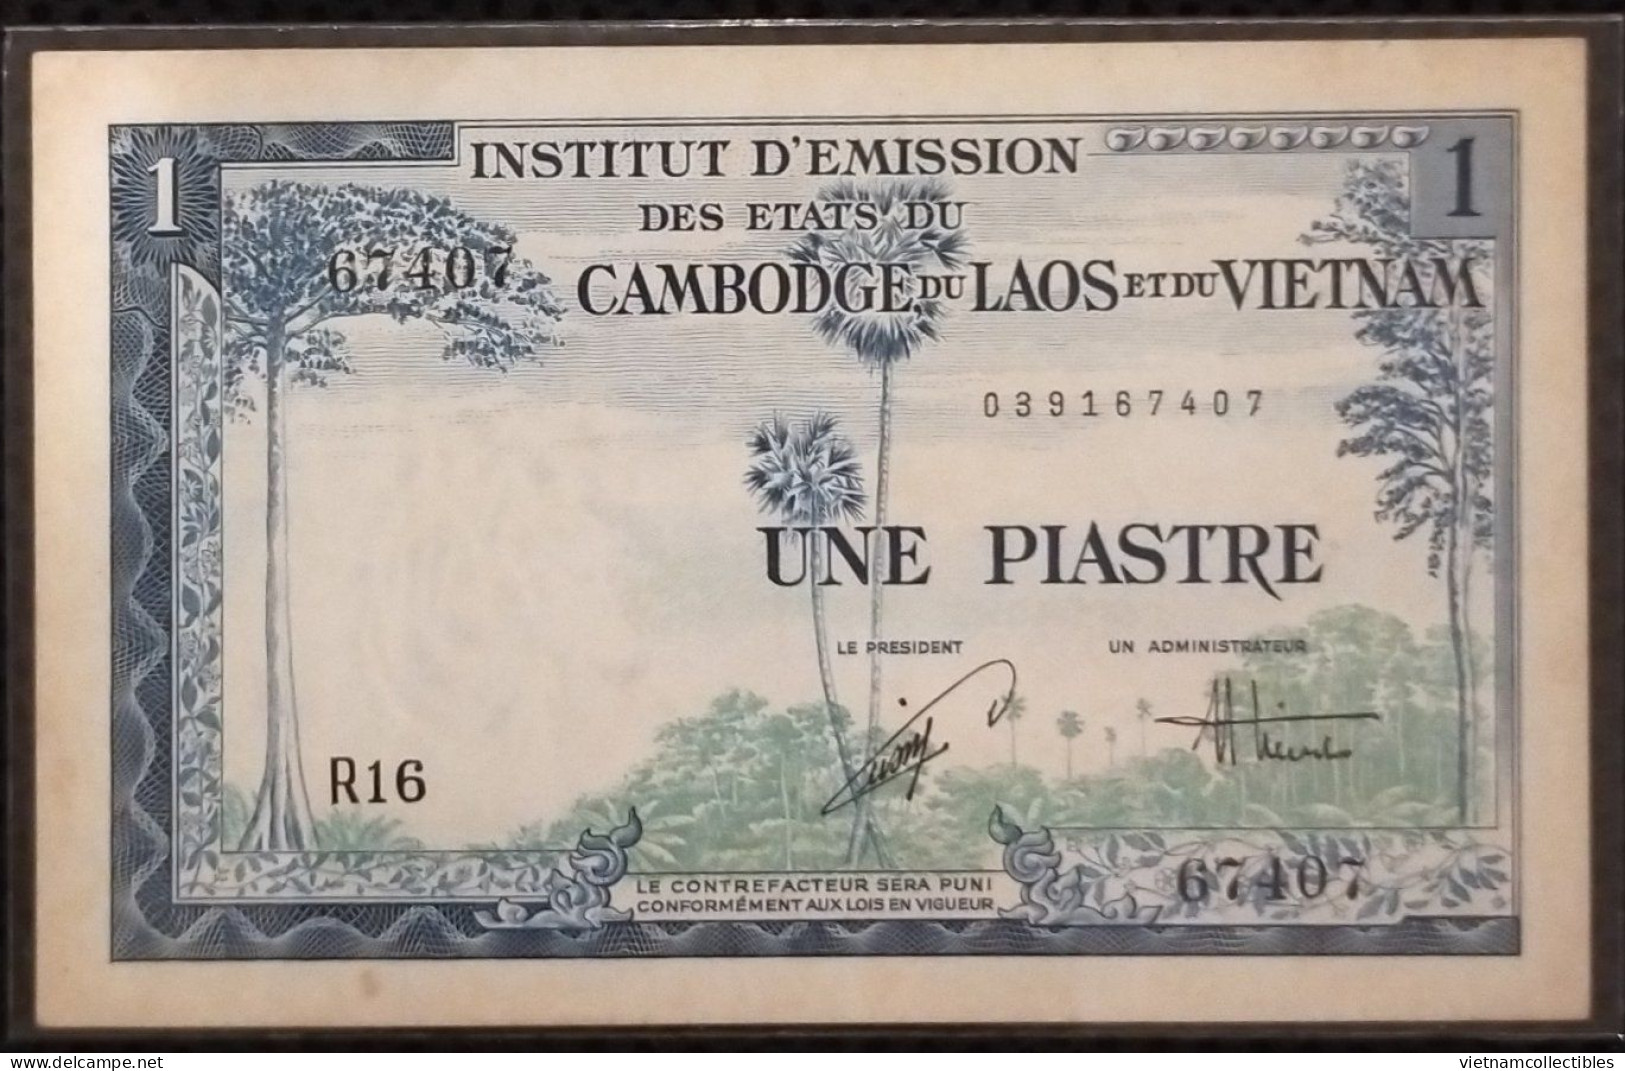 Indochine Indochina Vietnam Viet Nam Laos Cambodia 1 Piastre AU Banknote Note 1954 - Pick # 105 / 2 Photos - Indochina